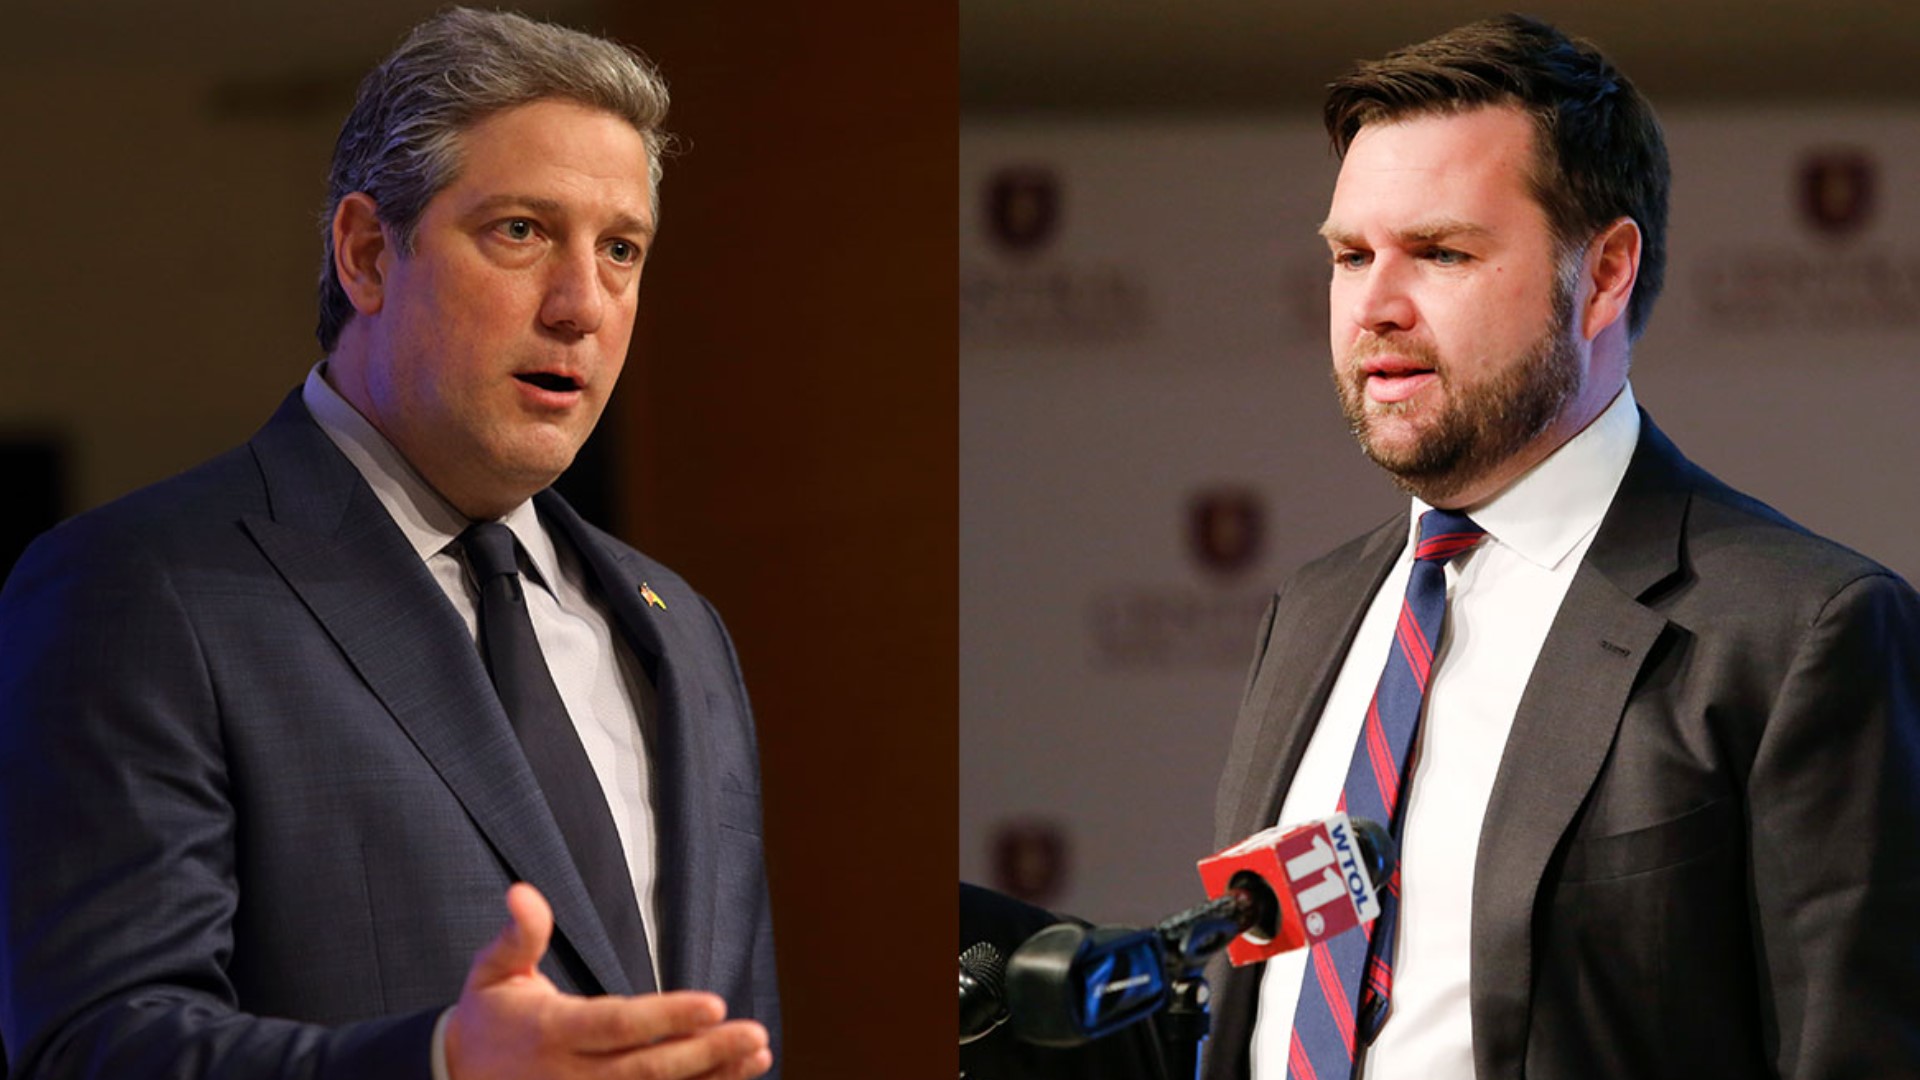 Democrat Tim Ryan and Republican JD Vance will debate Monday night in Cleveland.